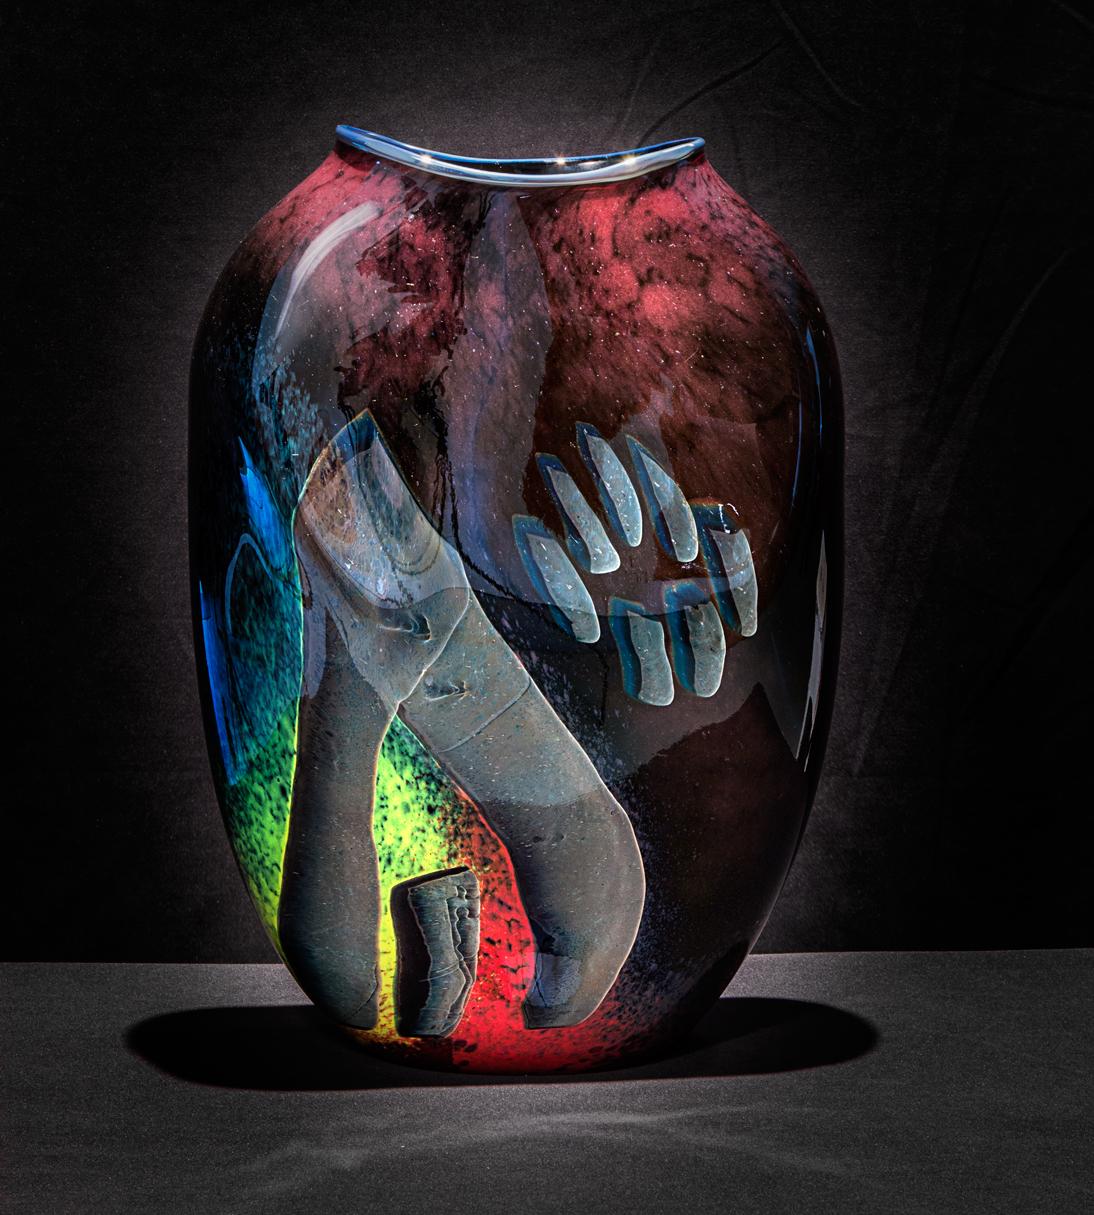 William Morris Figurative Sculpture - Stone Vessel.  Contemporary blown glass art